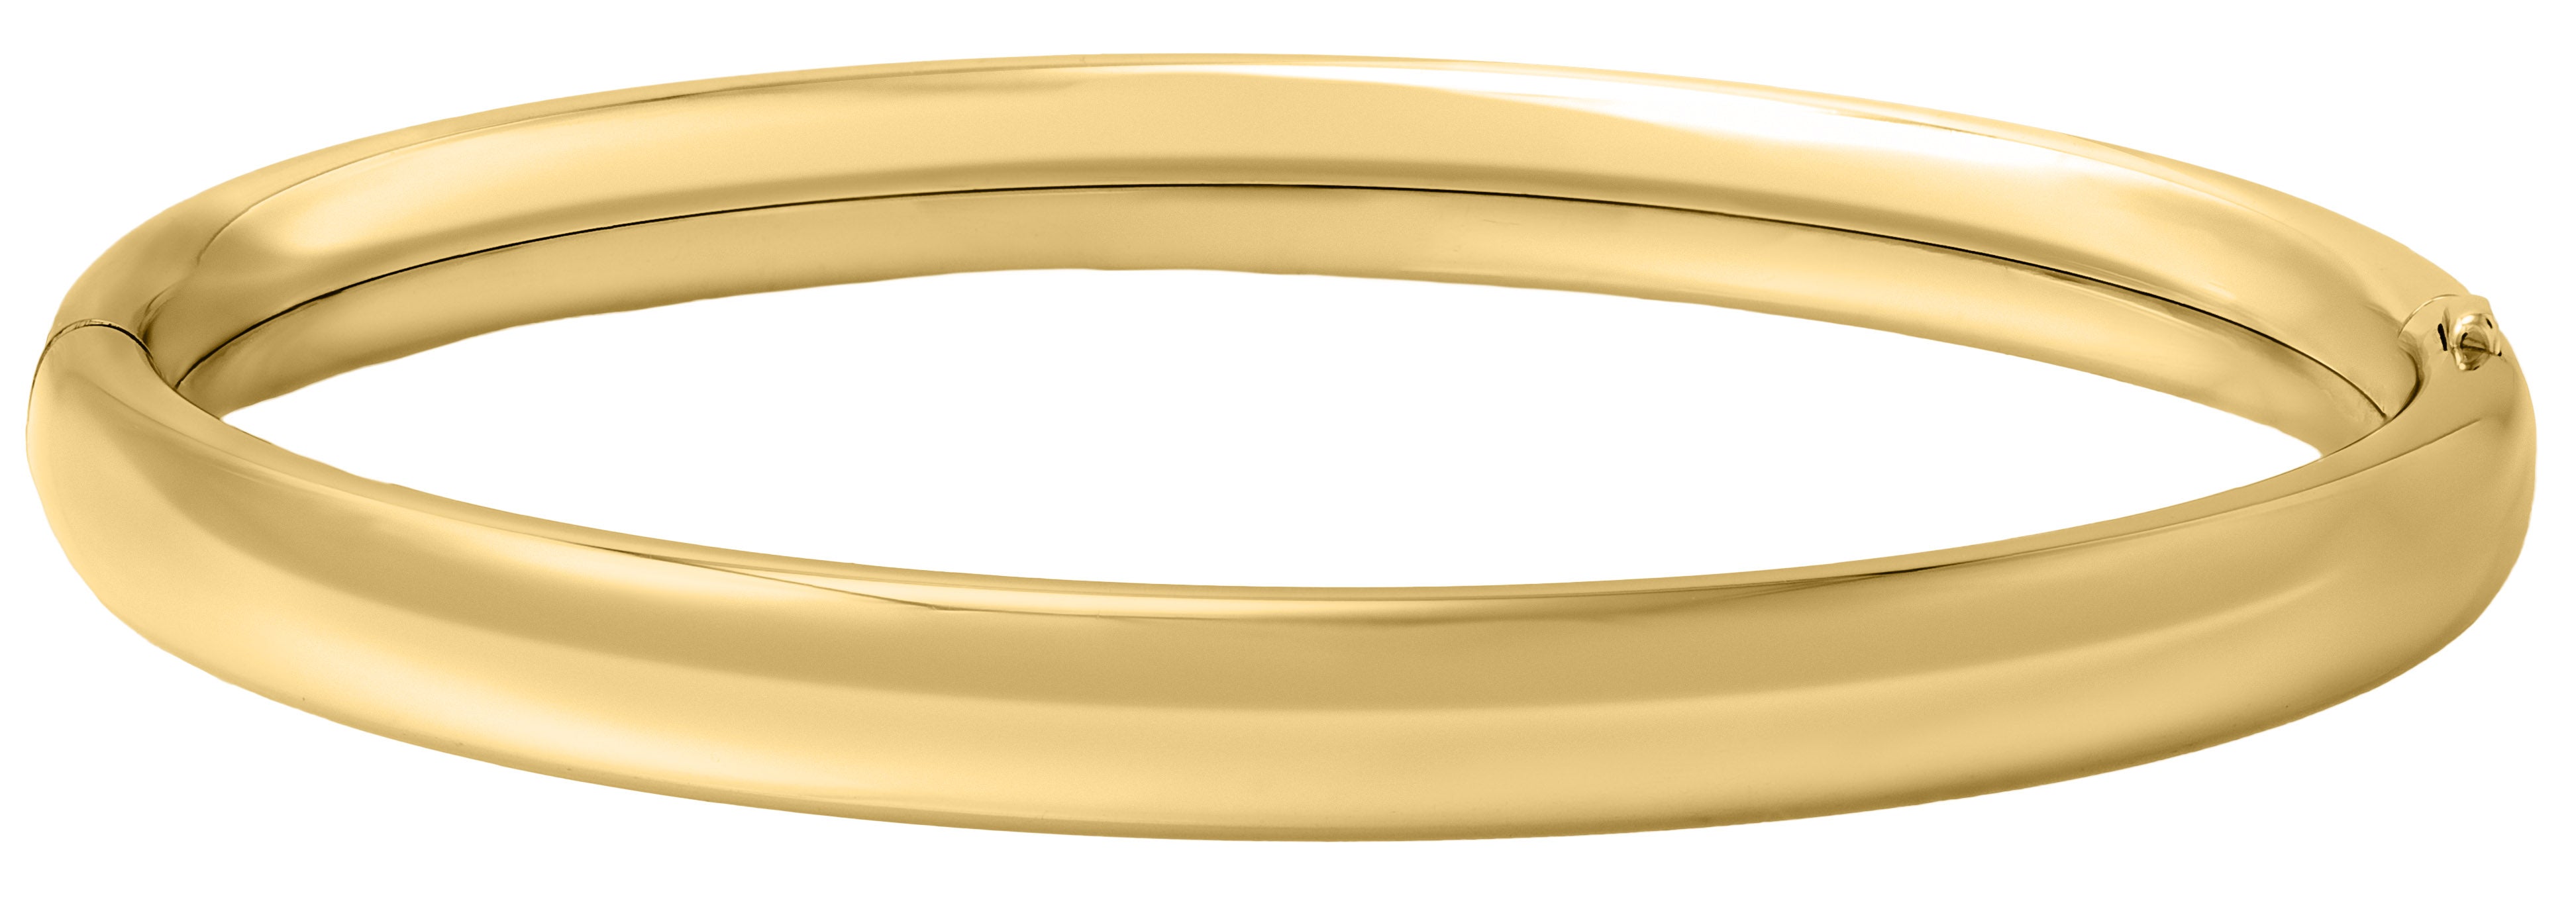 Children's Gold-Filled Bangle Bracelet